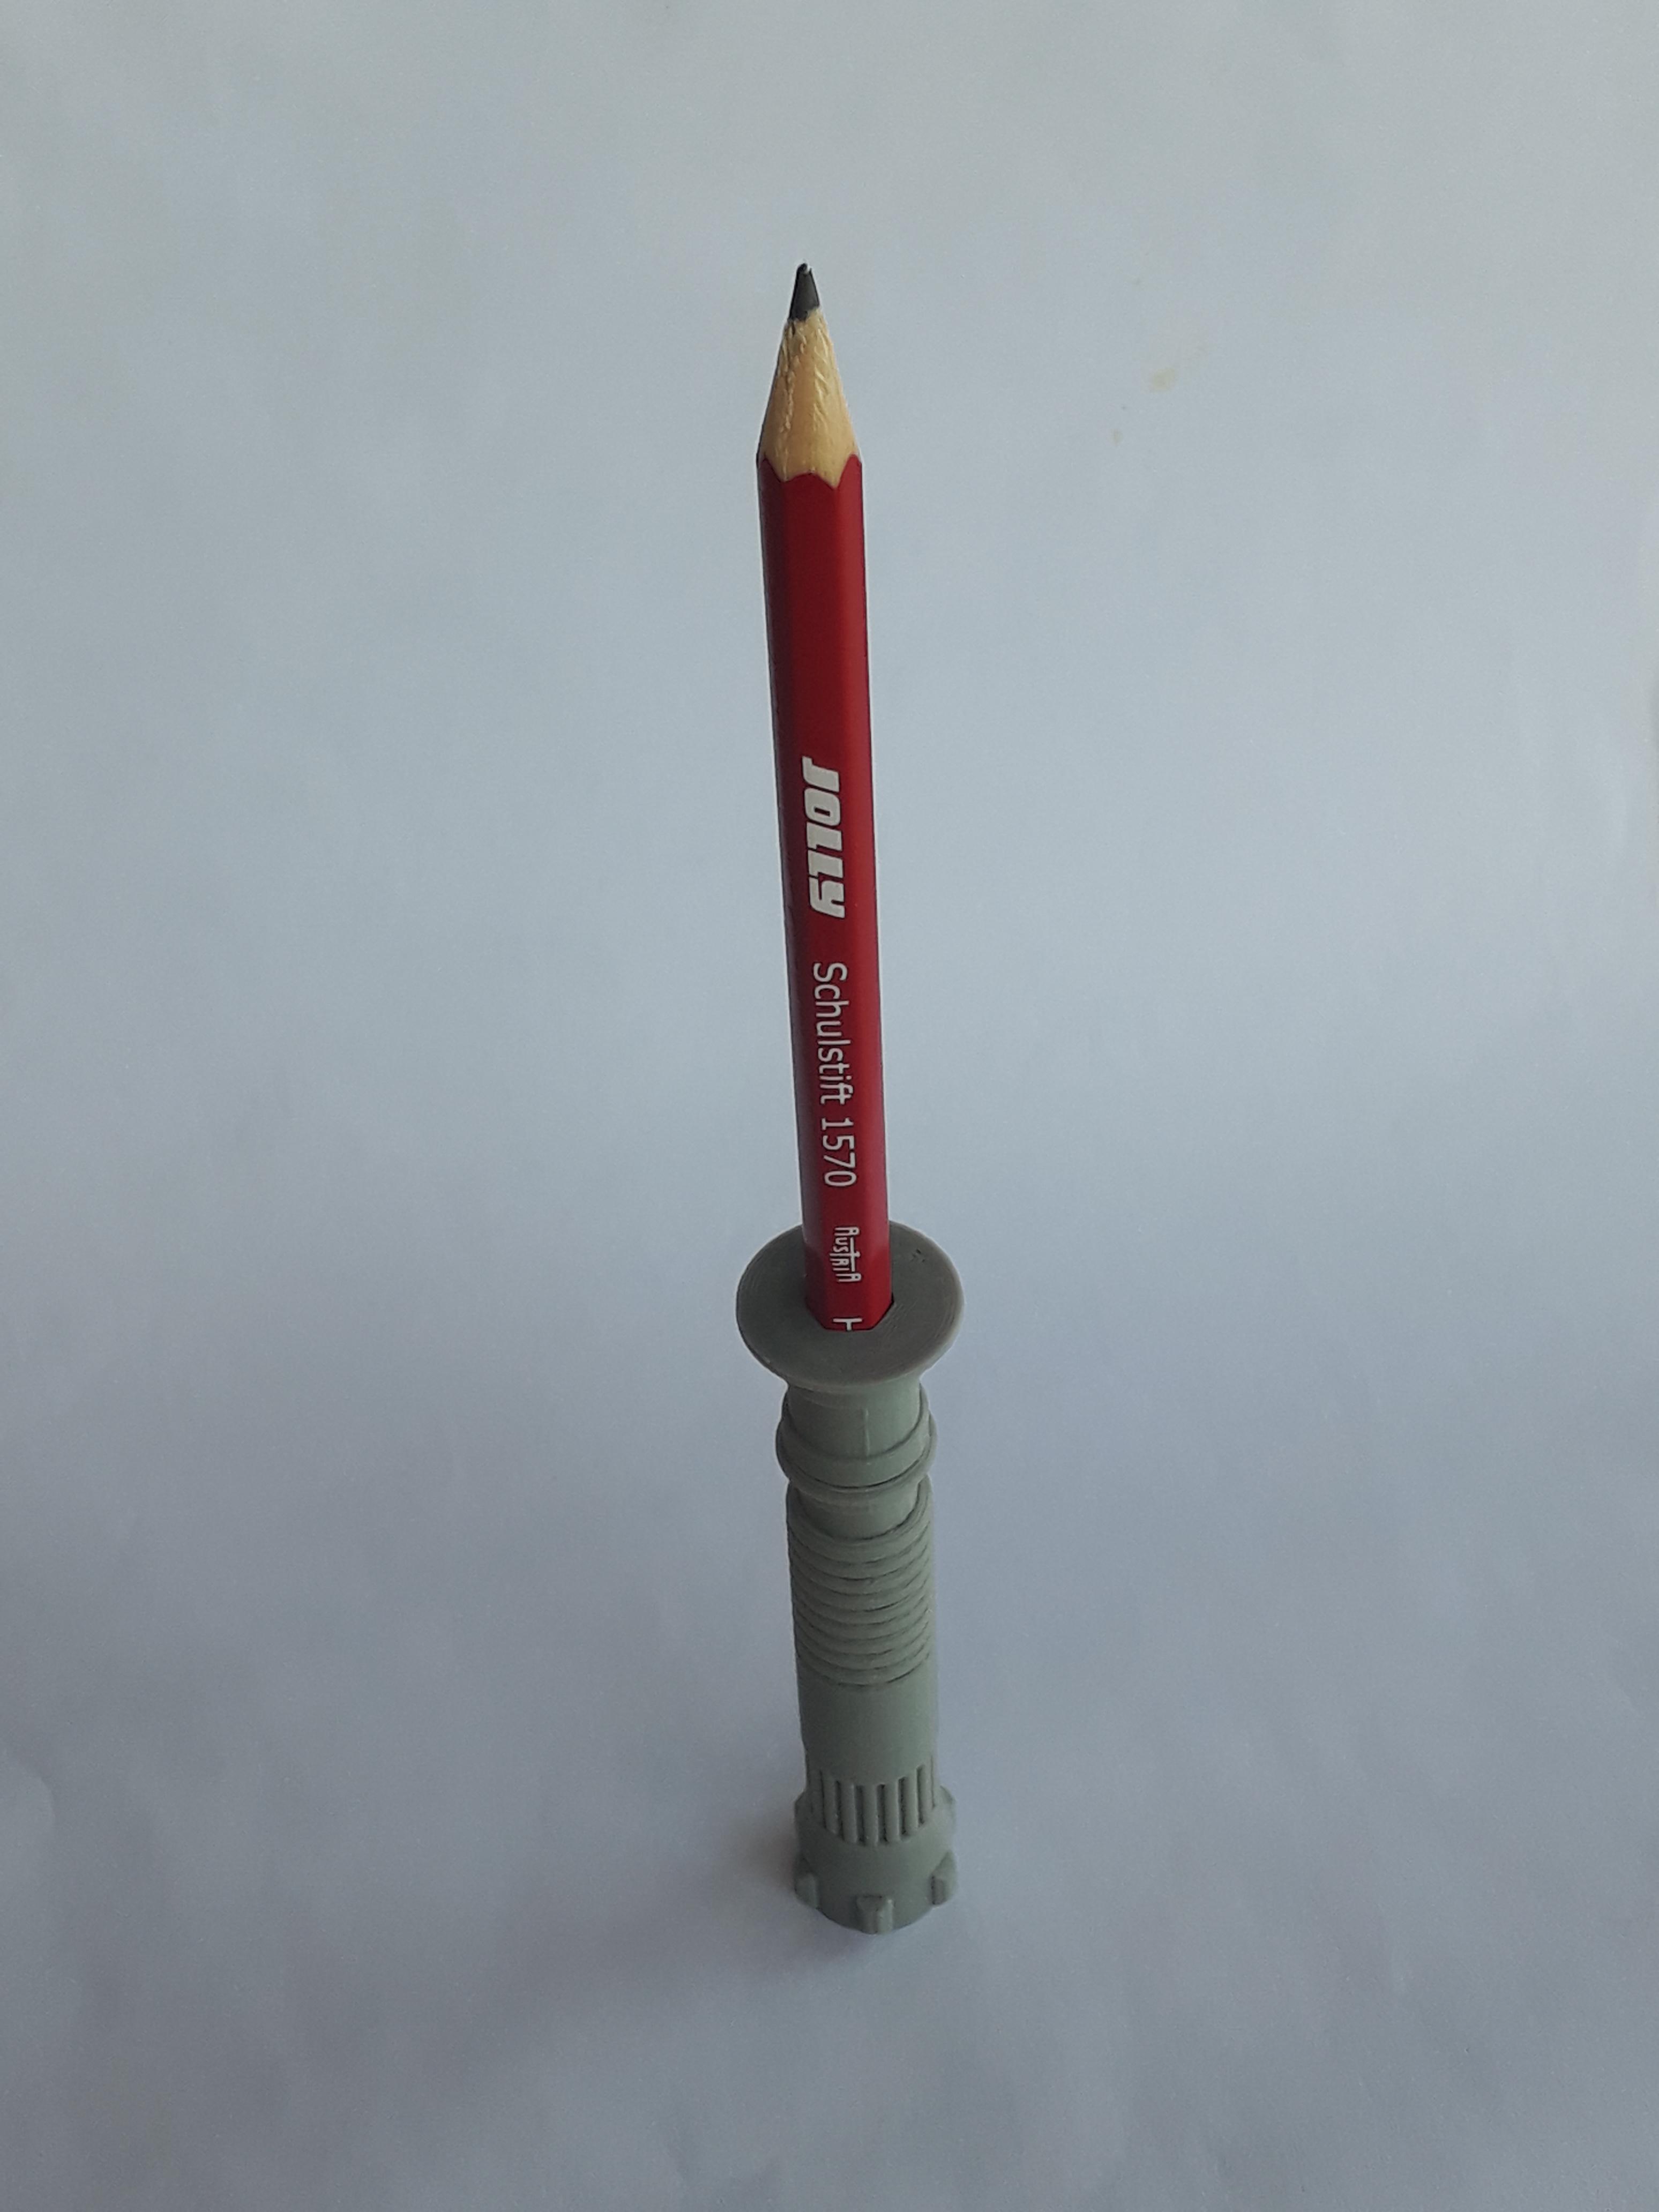 Lightsaber Pencil Top